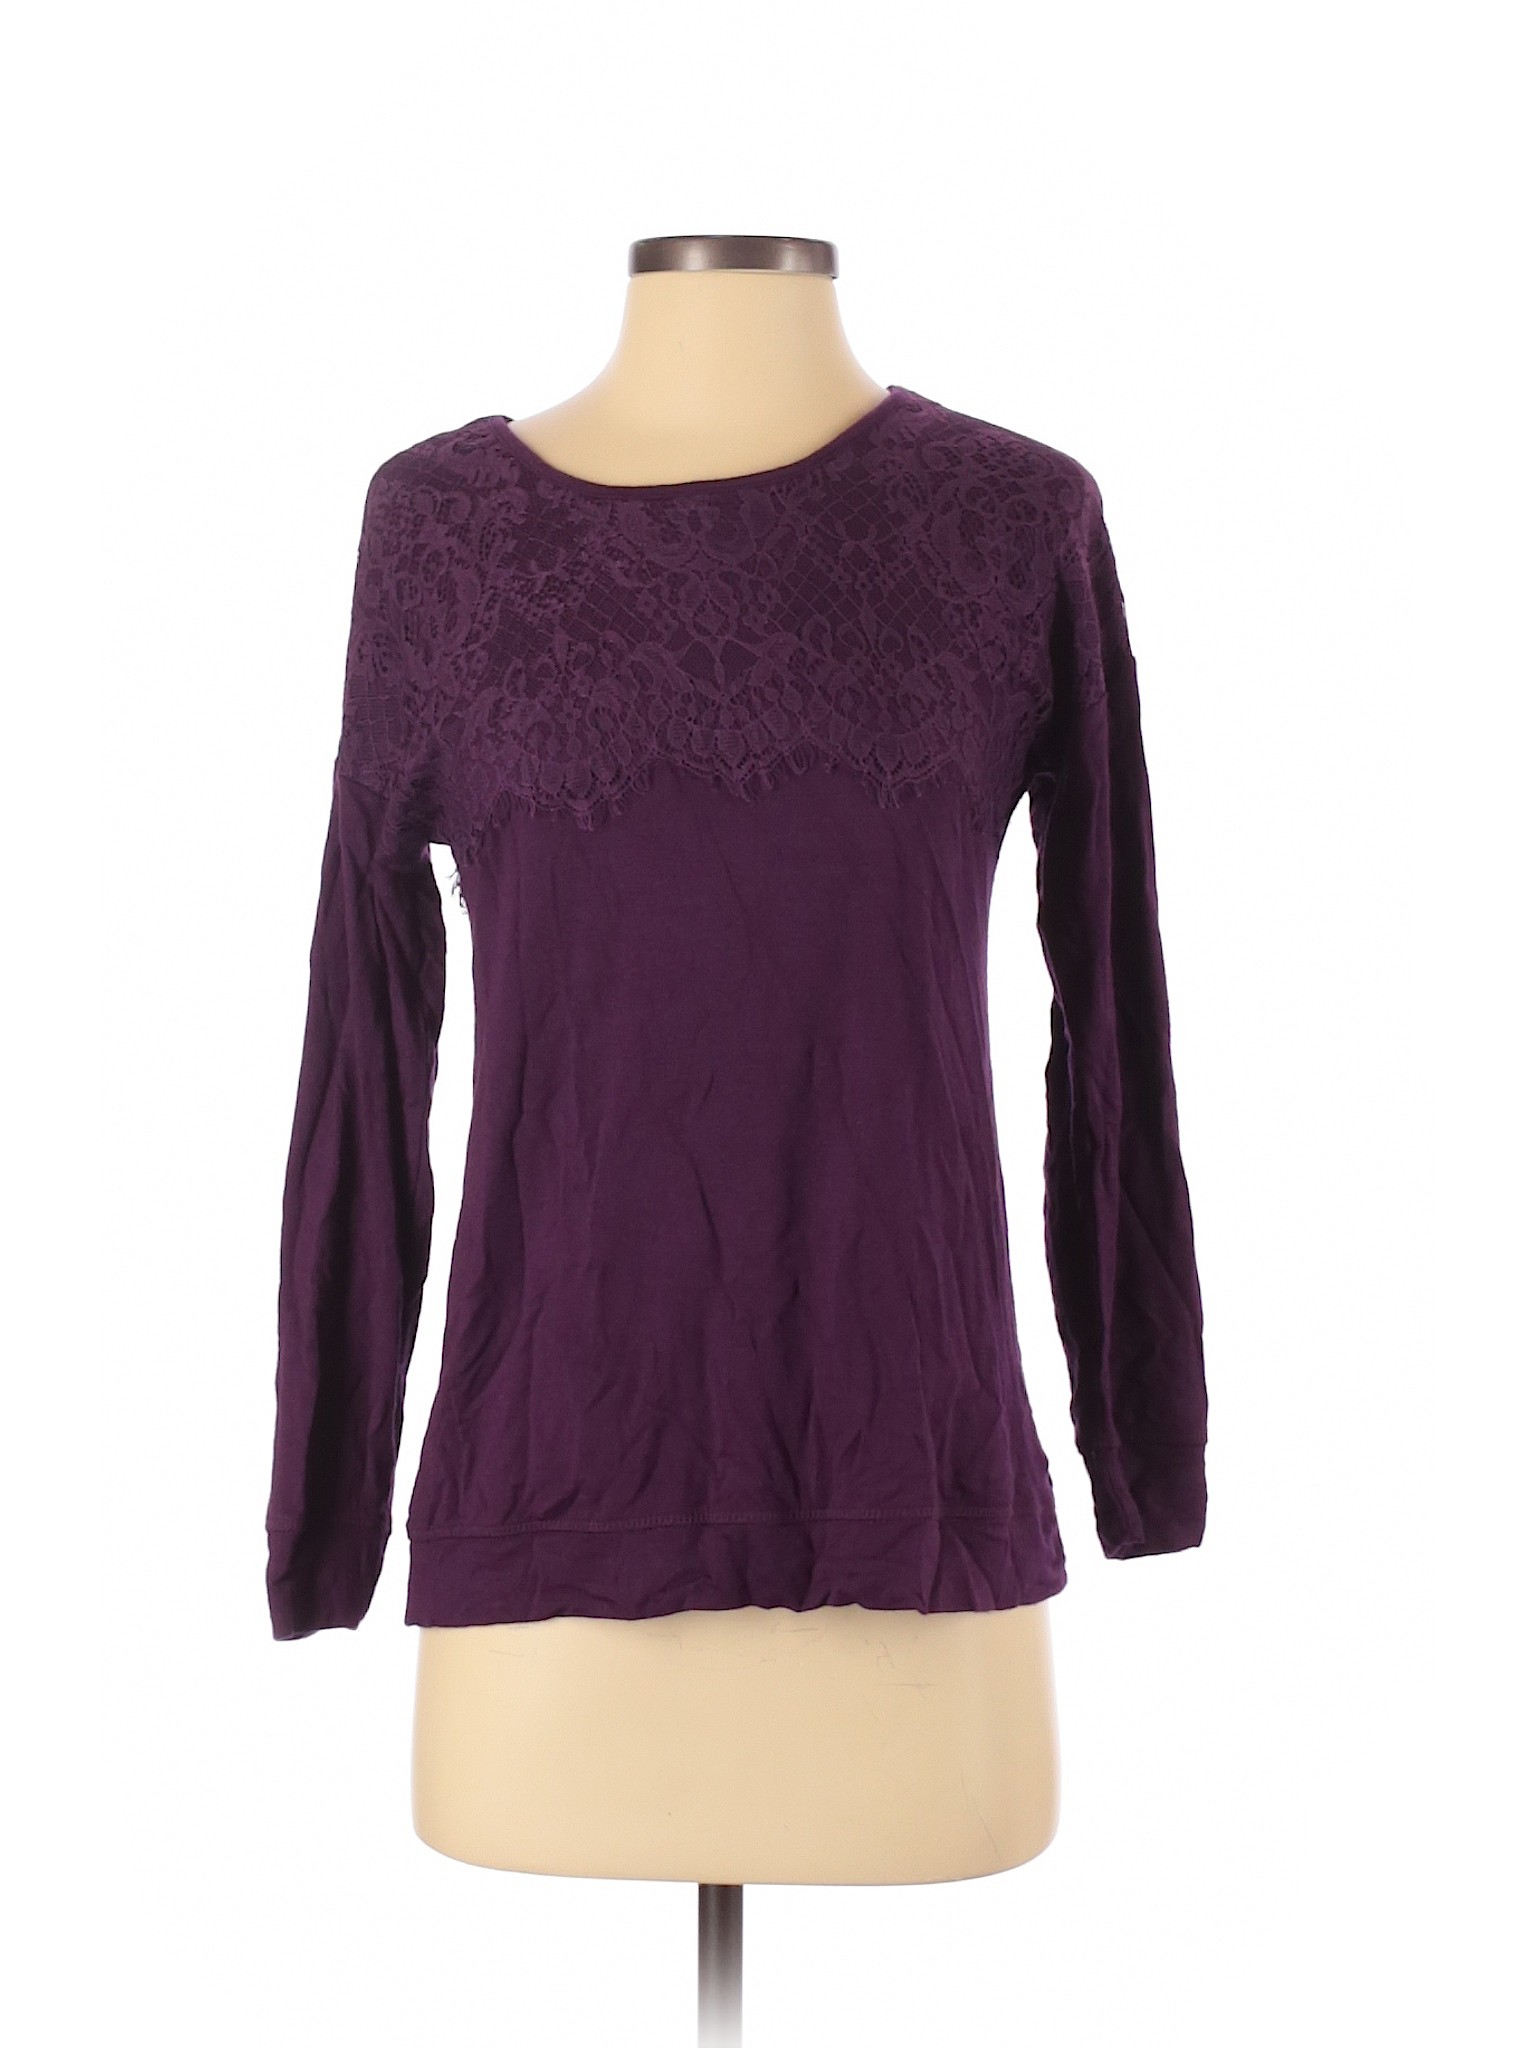 Westport Women Purple Long Sleeve Top S | eBay